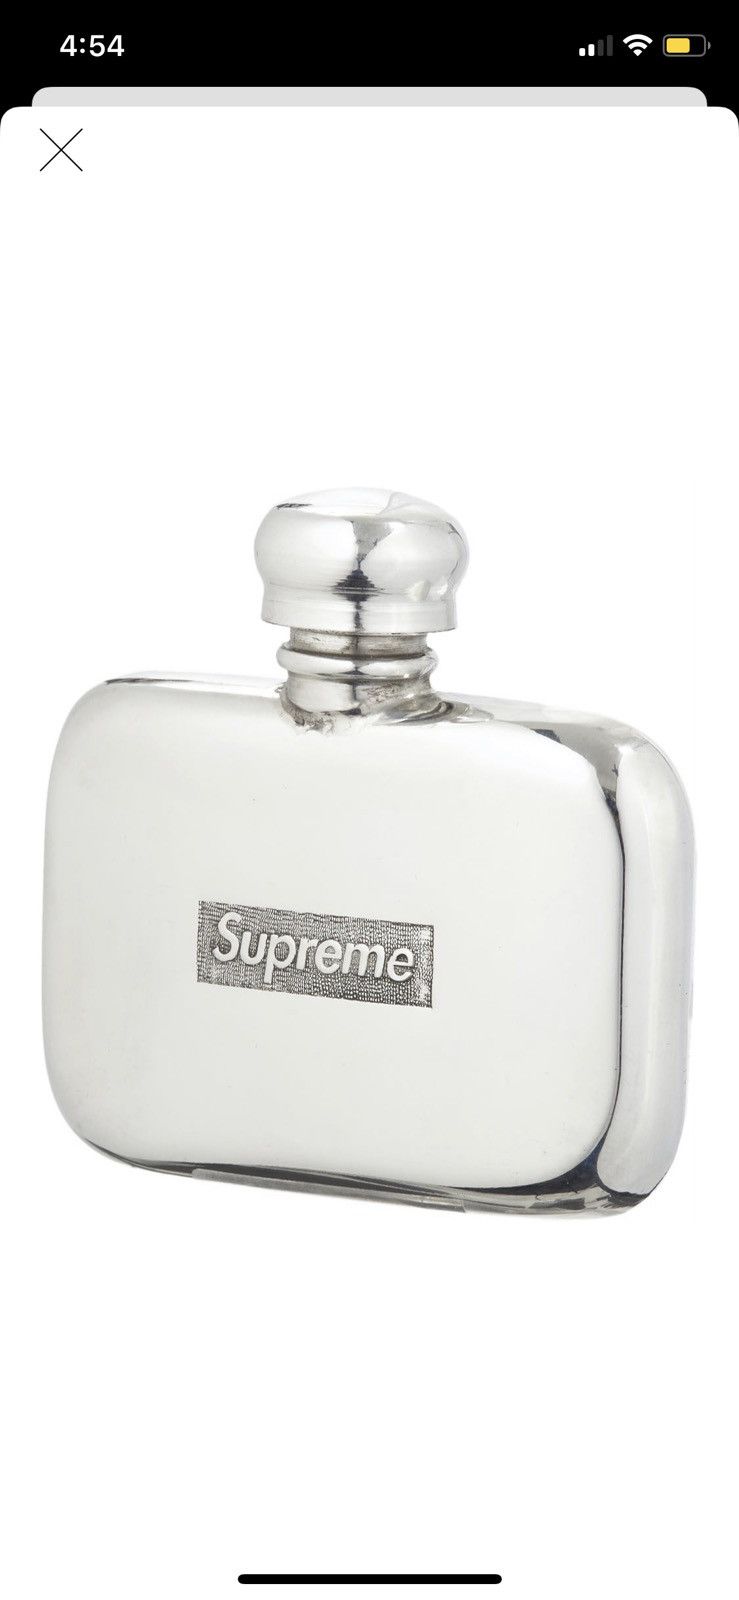 Supreme Flask | Grailed